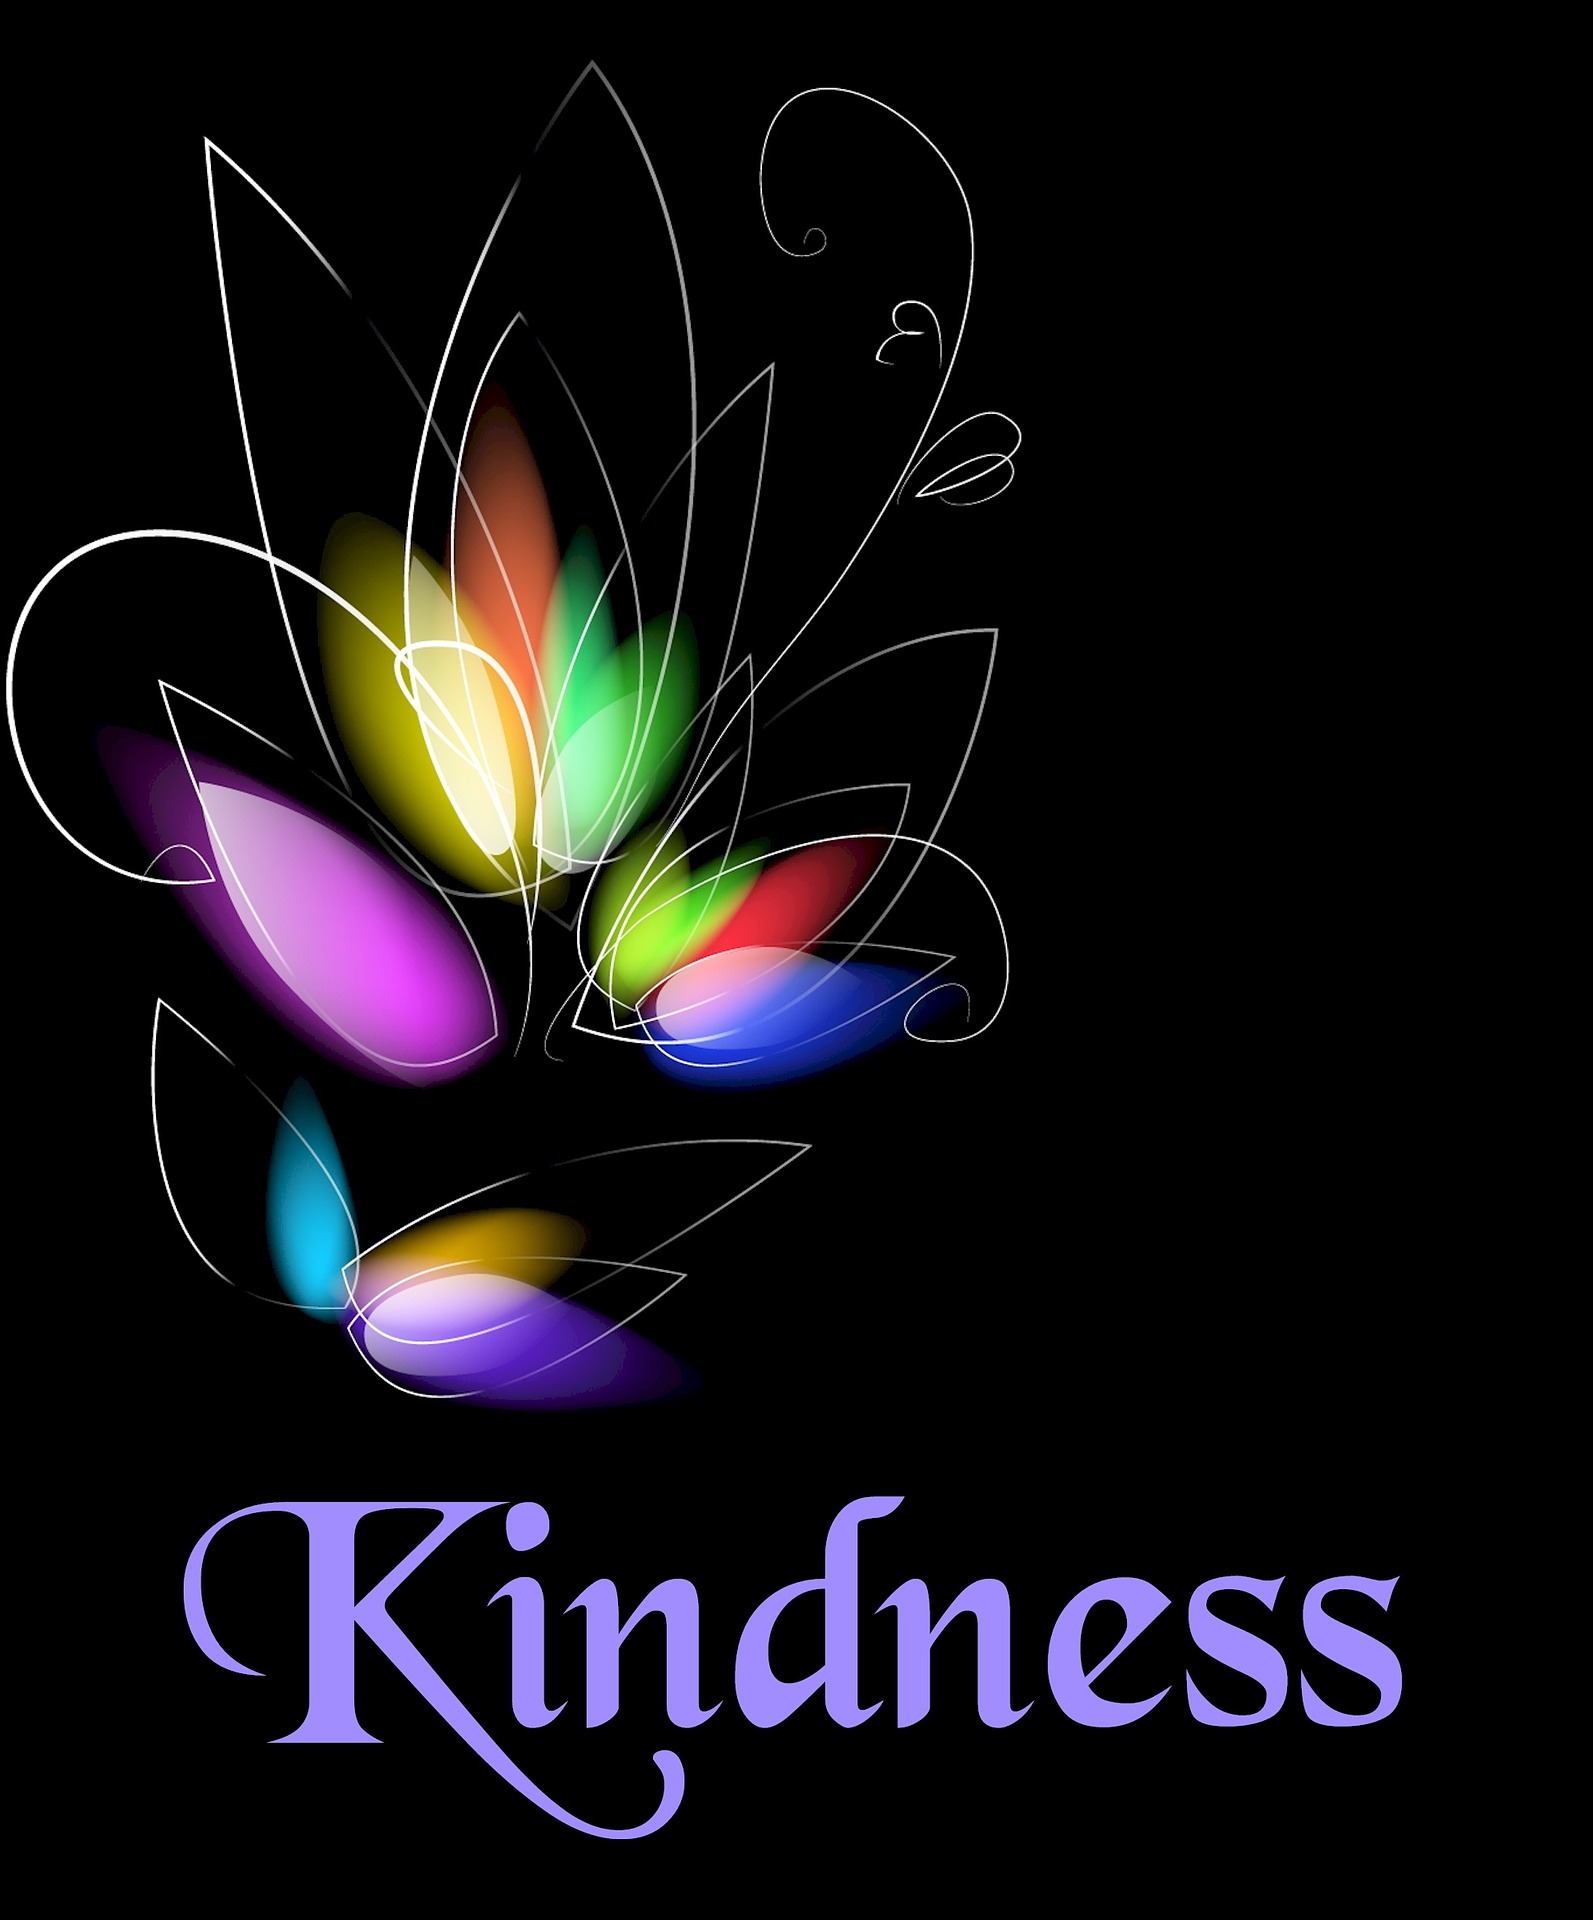 Kindness club logo